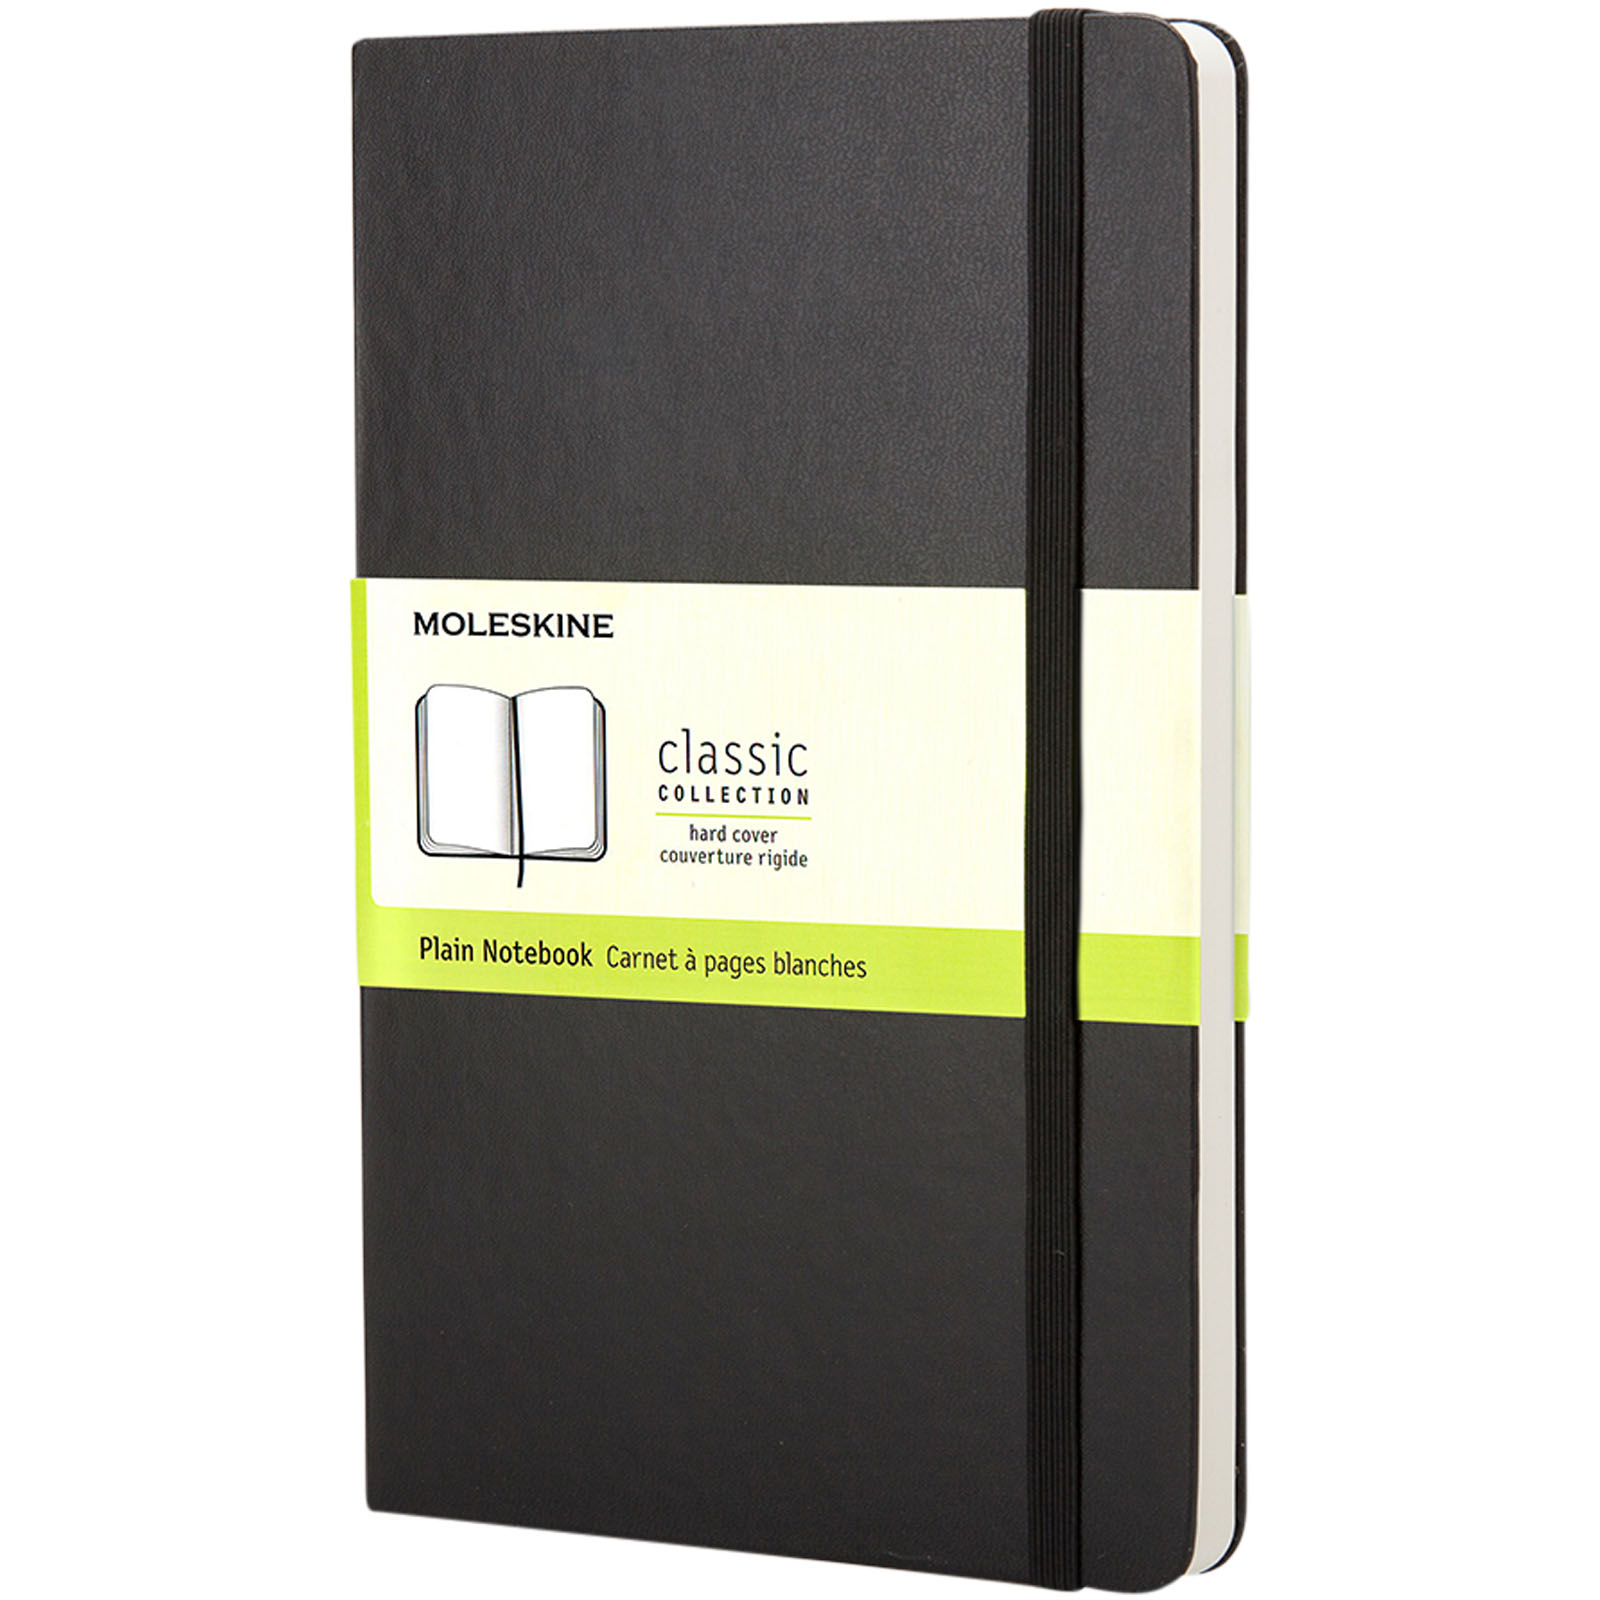 Moleskine Classic Pocket Notebook - Haversham